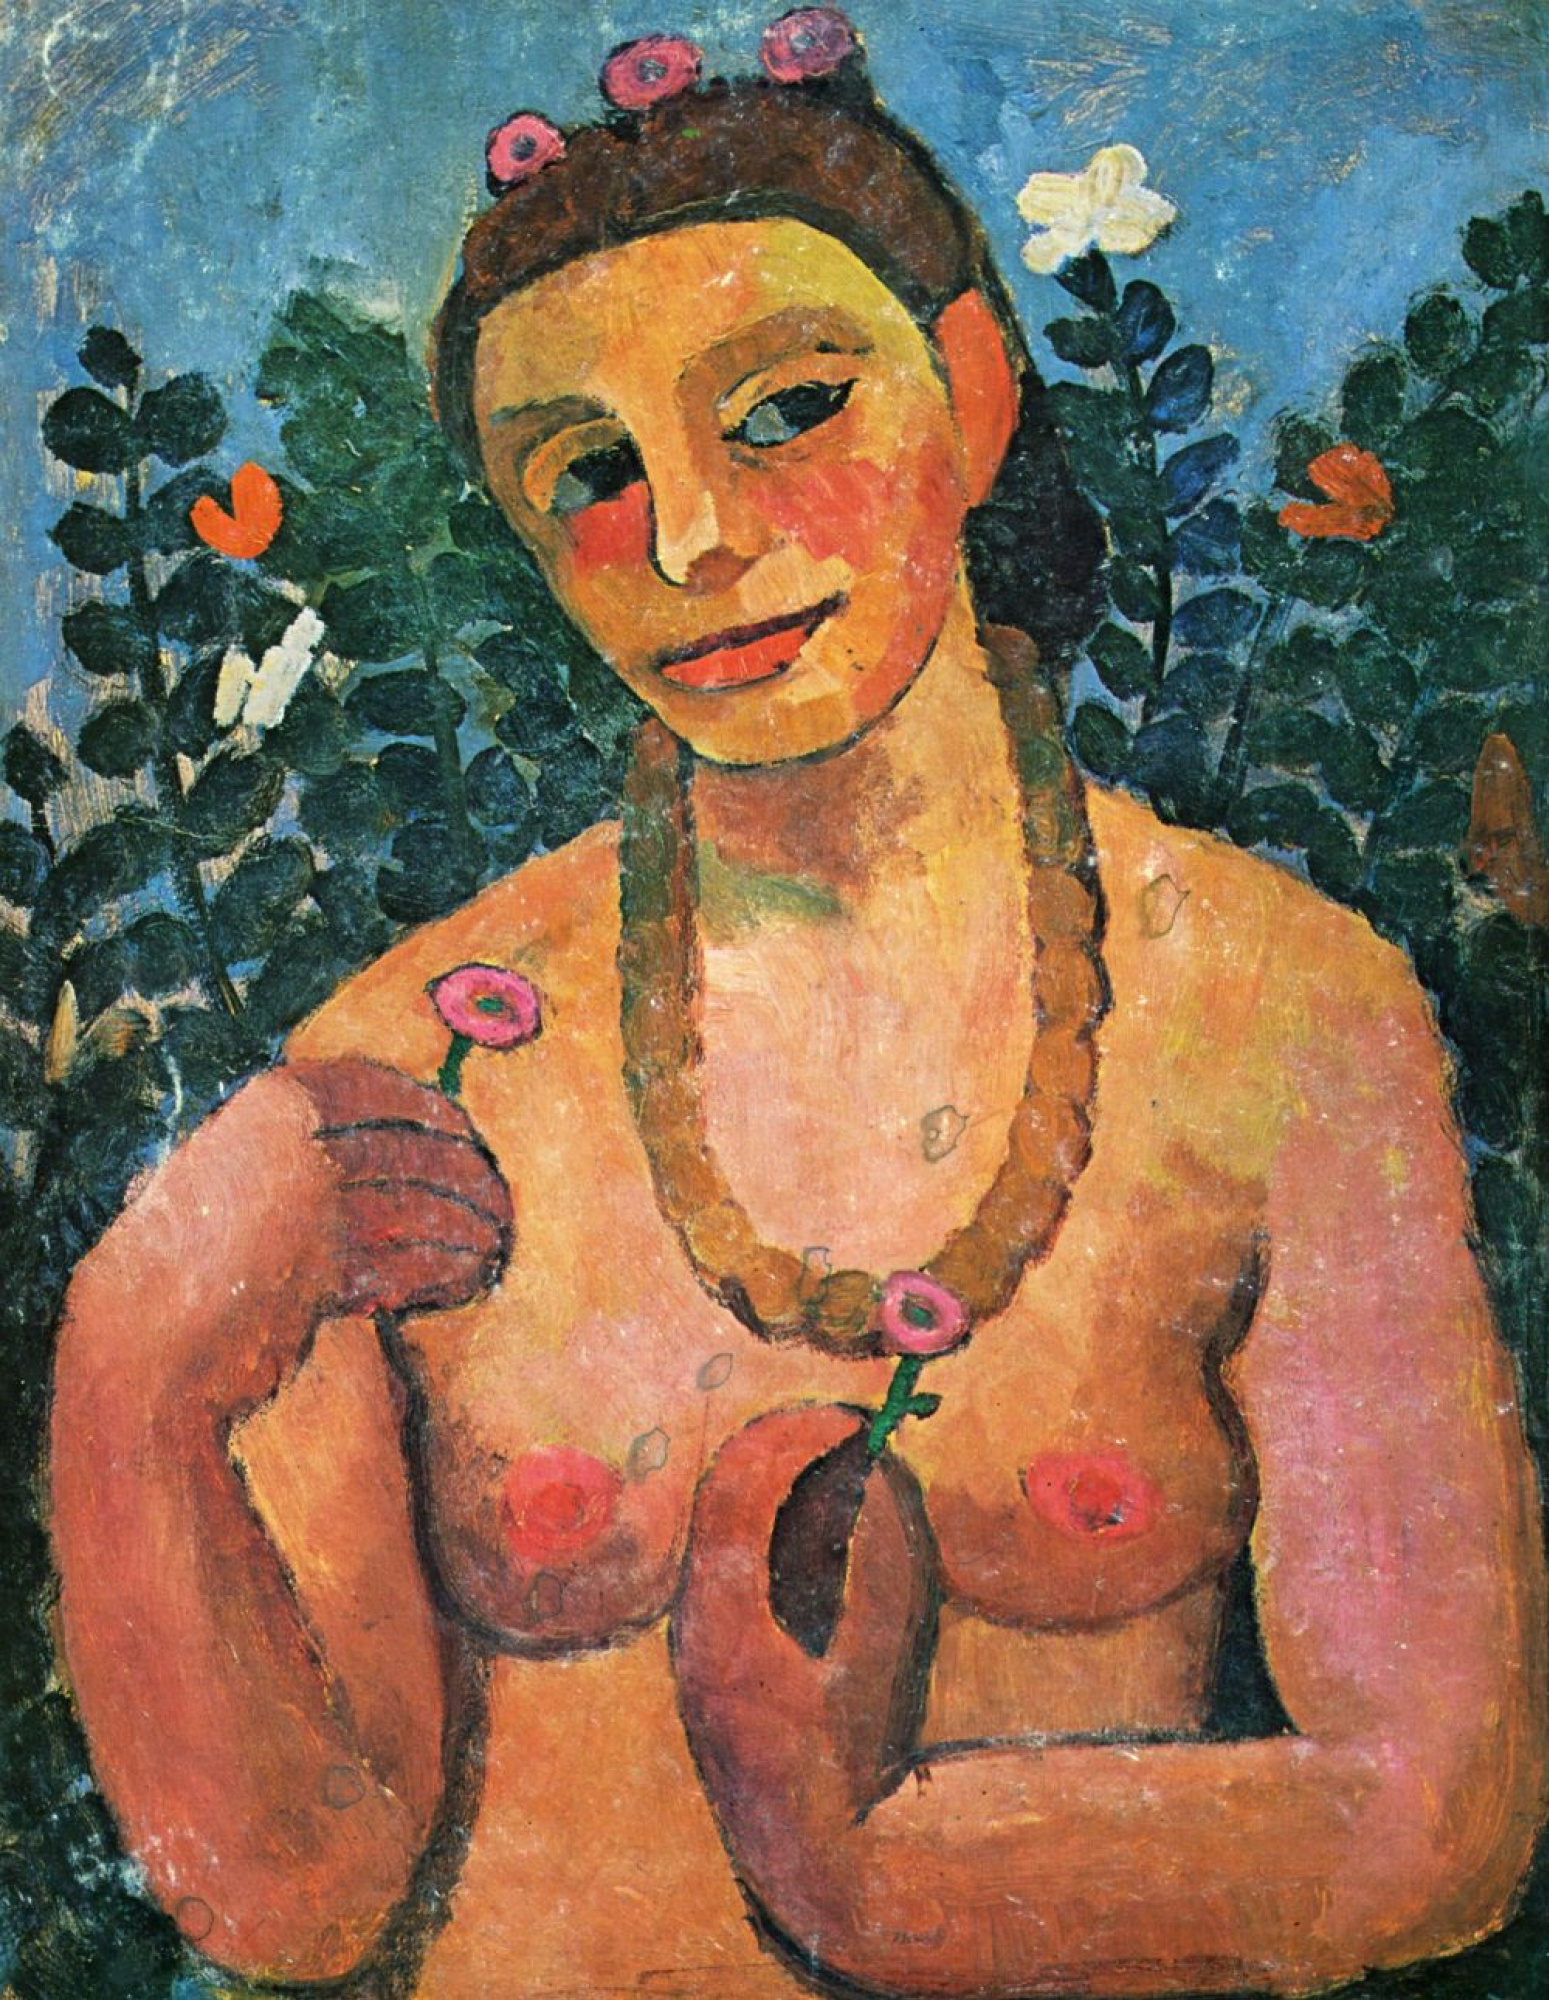  Paula Modersohn-Becker "Self-Portrait" 1906